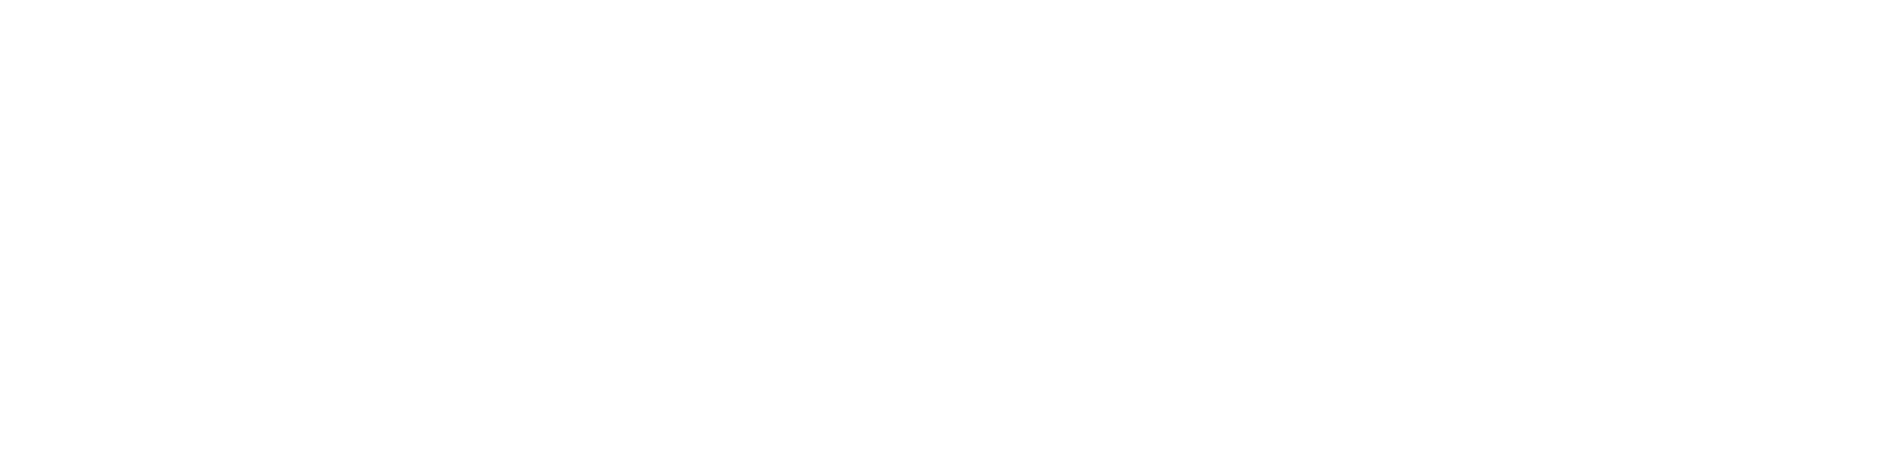 Bitmagic logo